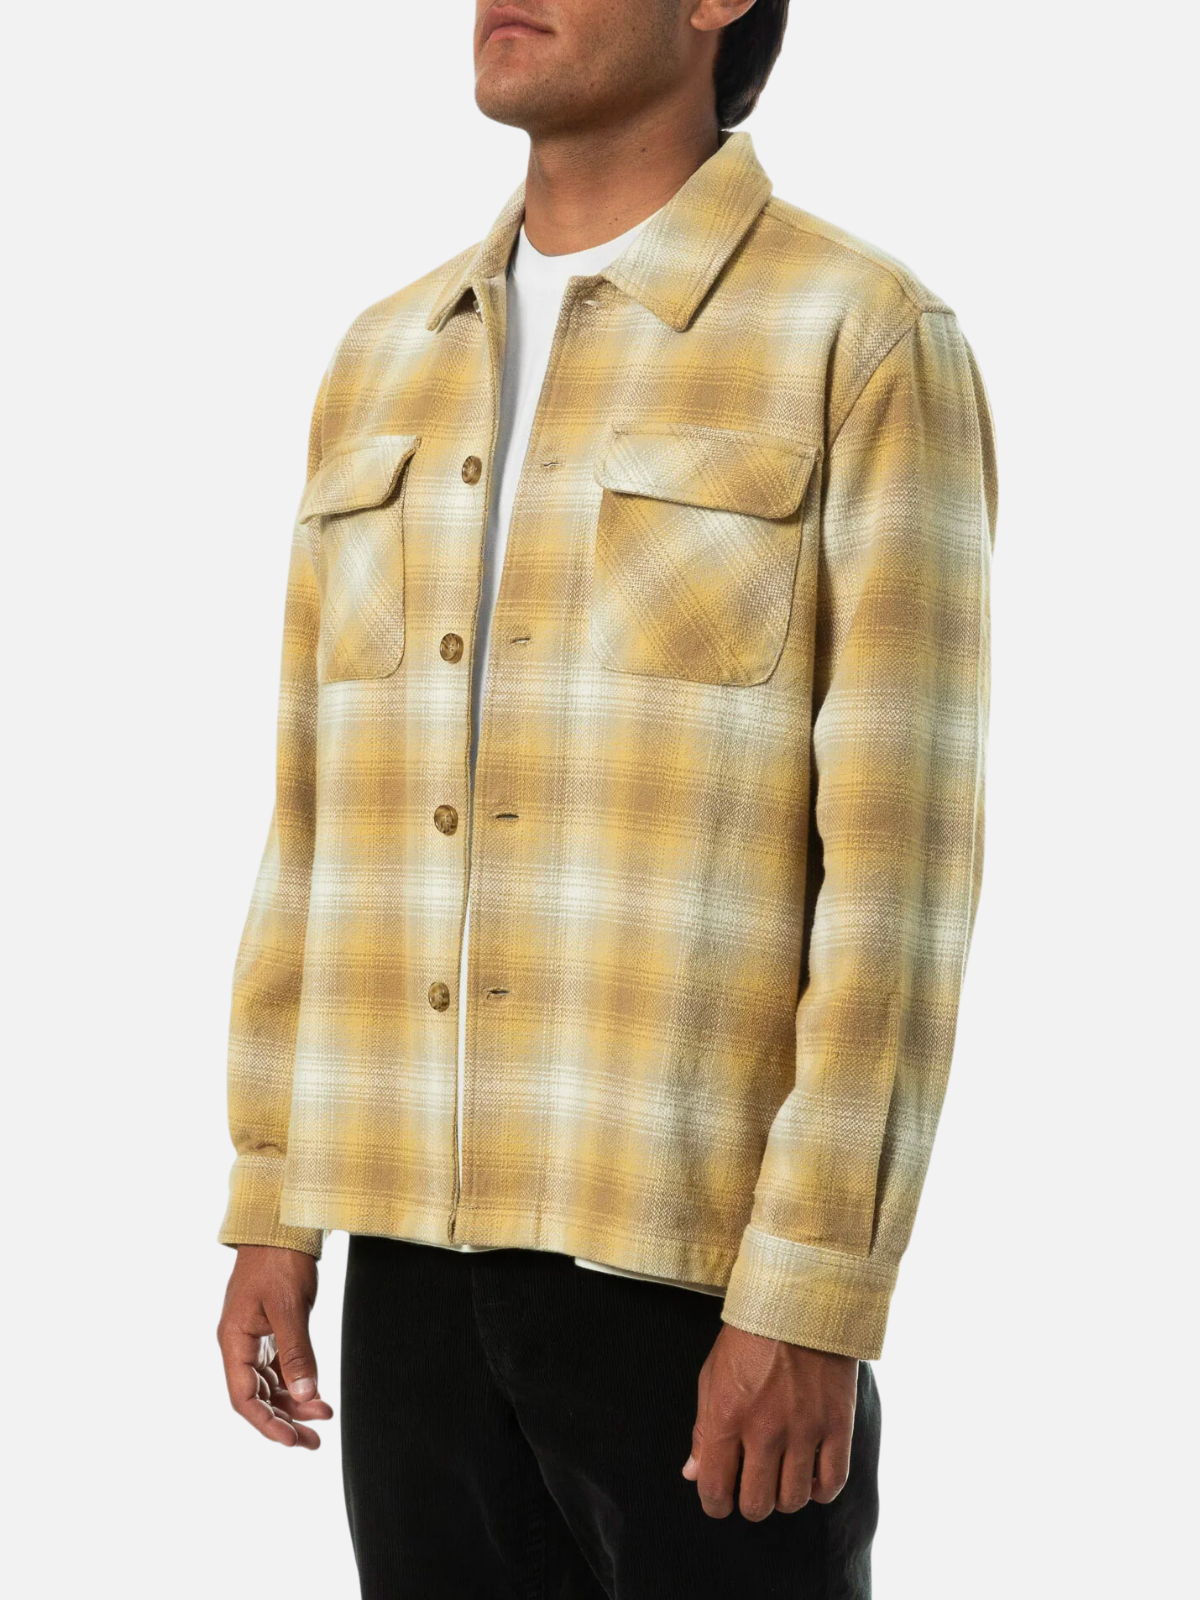 katin shiloh flannel ermine yellow gold white plaid heavyweight cotton over shirt jacket kempt athens ga georgia men's clothing store